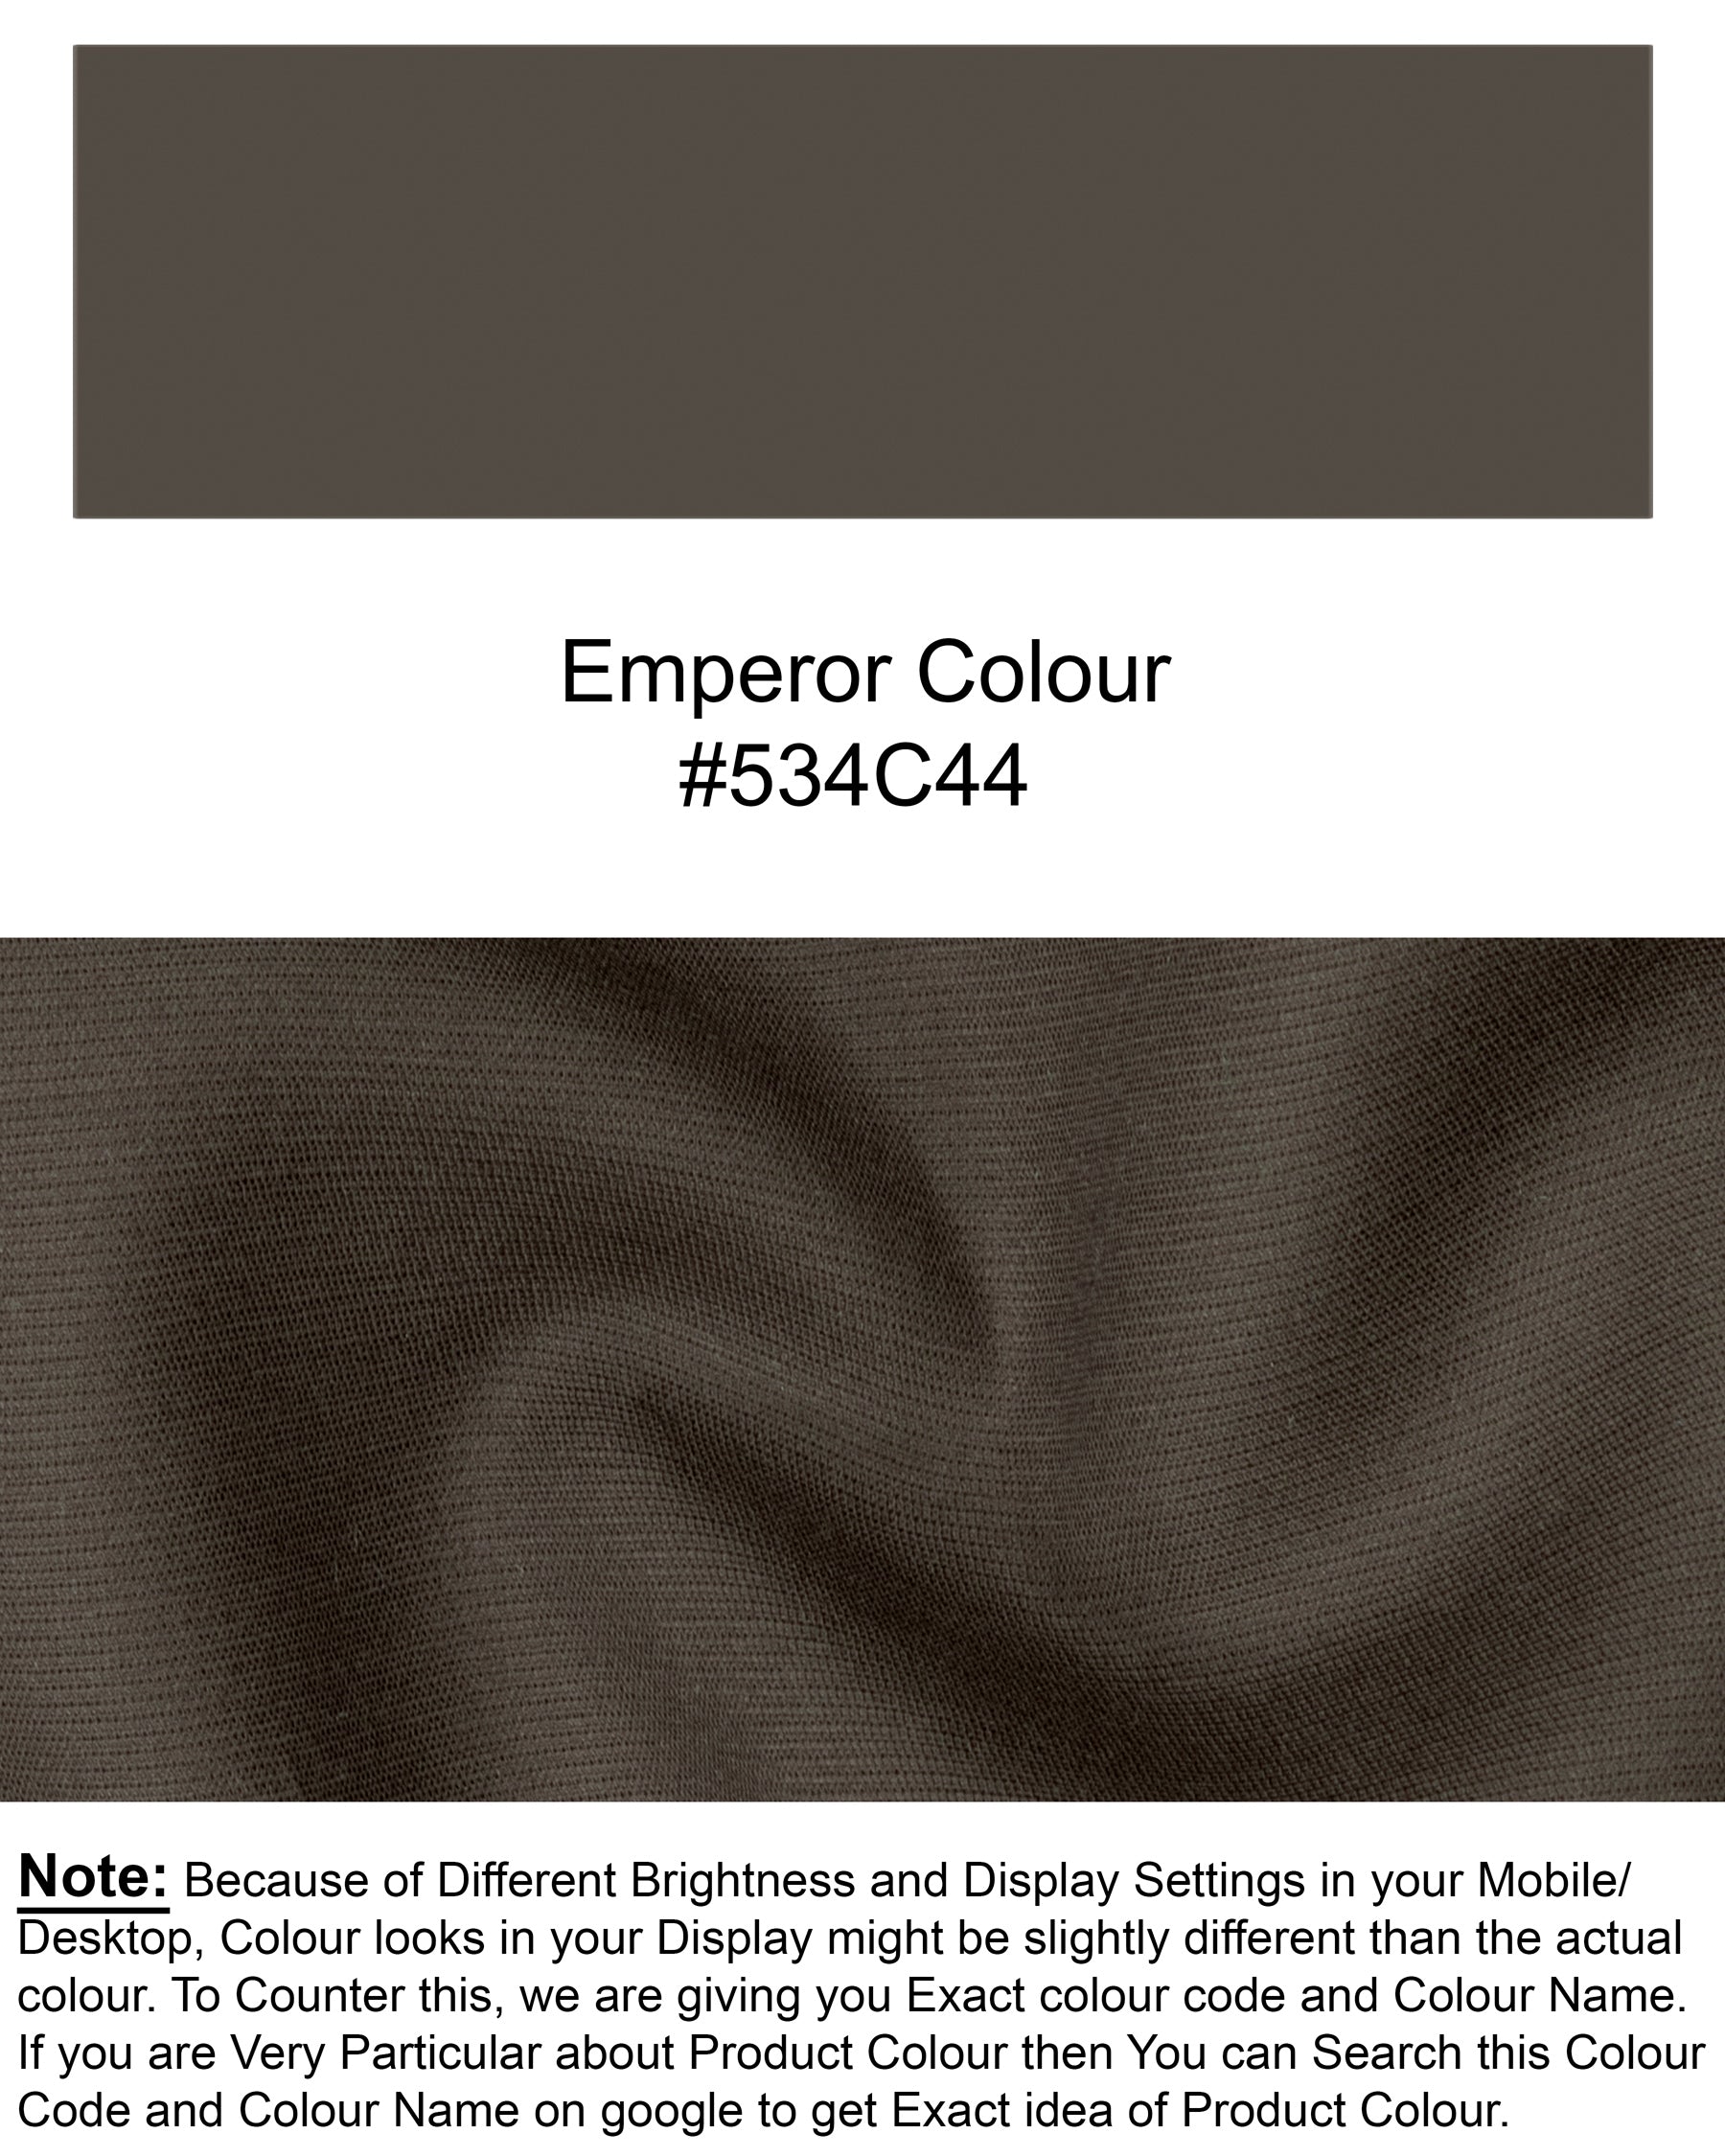 Emperor Brown Premium Cotton Waistcoat V1259-36, V1259-38, V1259-40, V1259-42, V1259-44, V1259-46, V1259-48, V1259-50, V1259-52, V1259-54, V1259-56, V1259-58, V1259-60